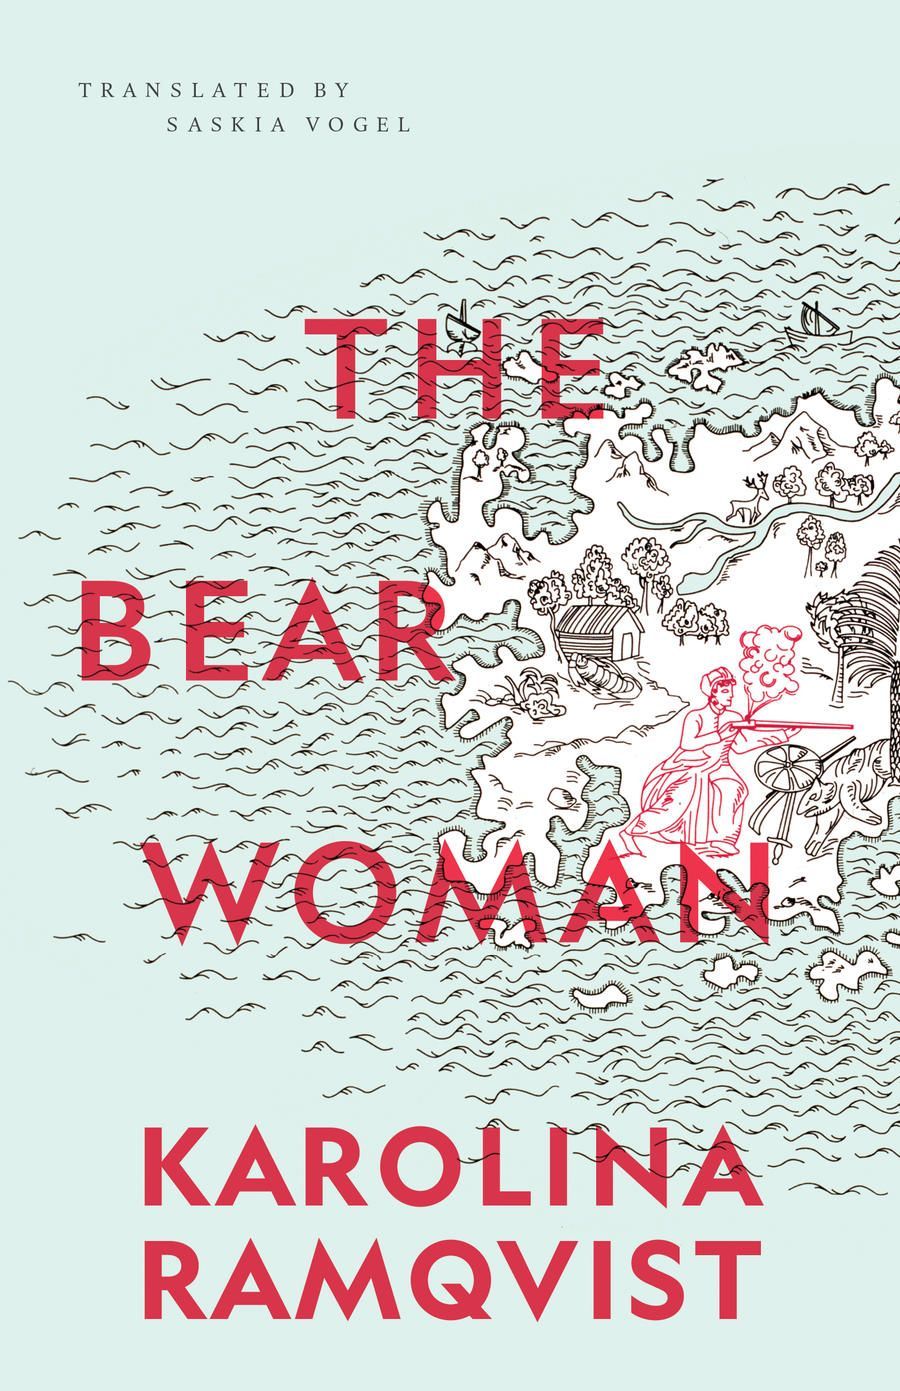 Navigating the Silences of Women’s History: On Karolina Ramqvist’s “The Bear Woman”